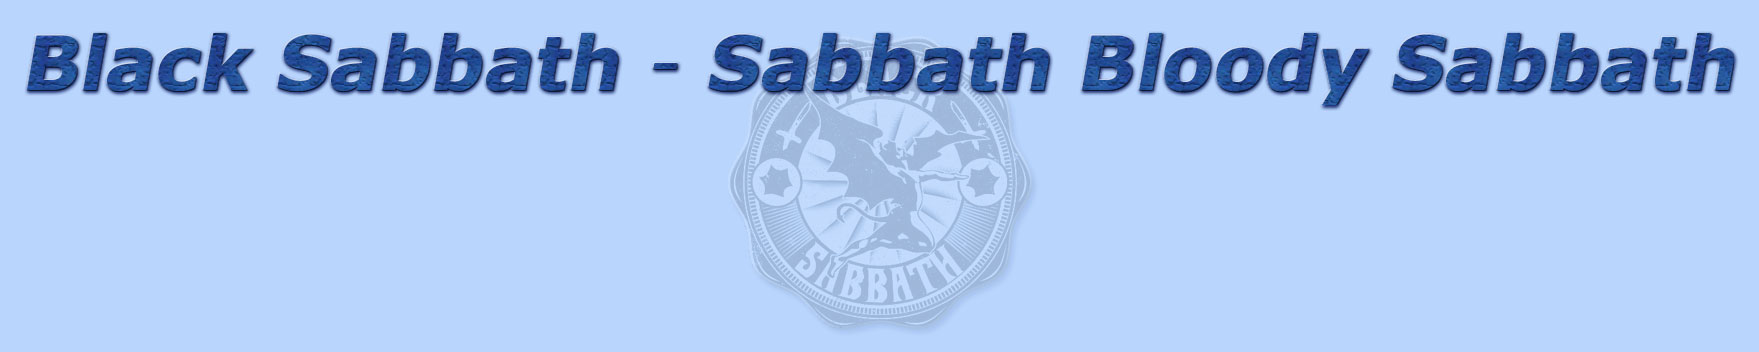 titolo sabbath bloody sabbath - black sabbath